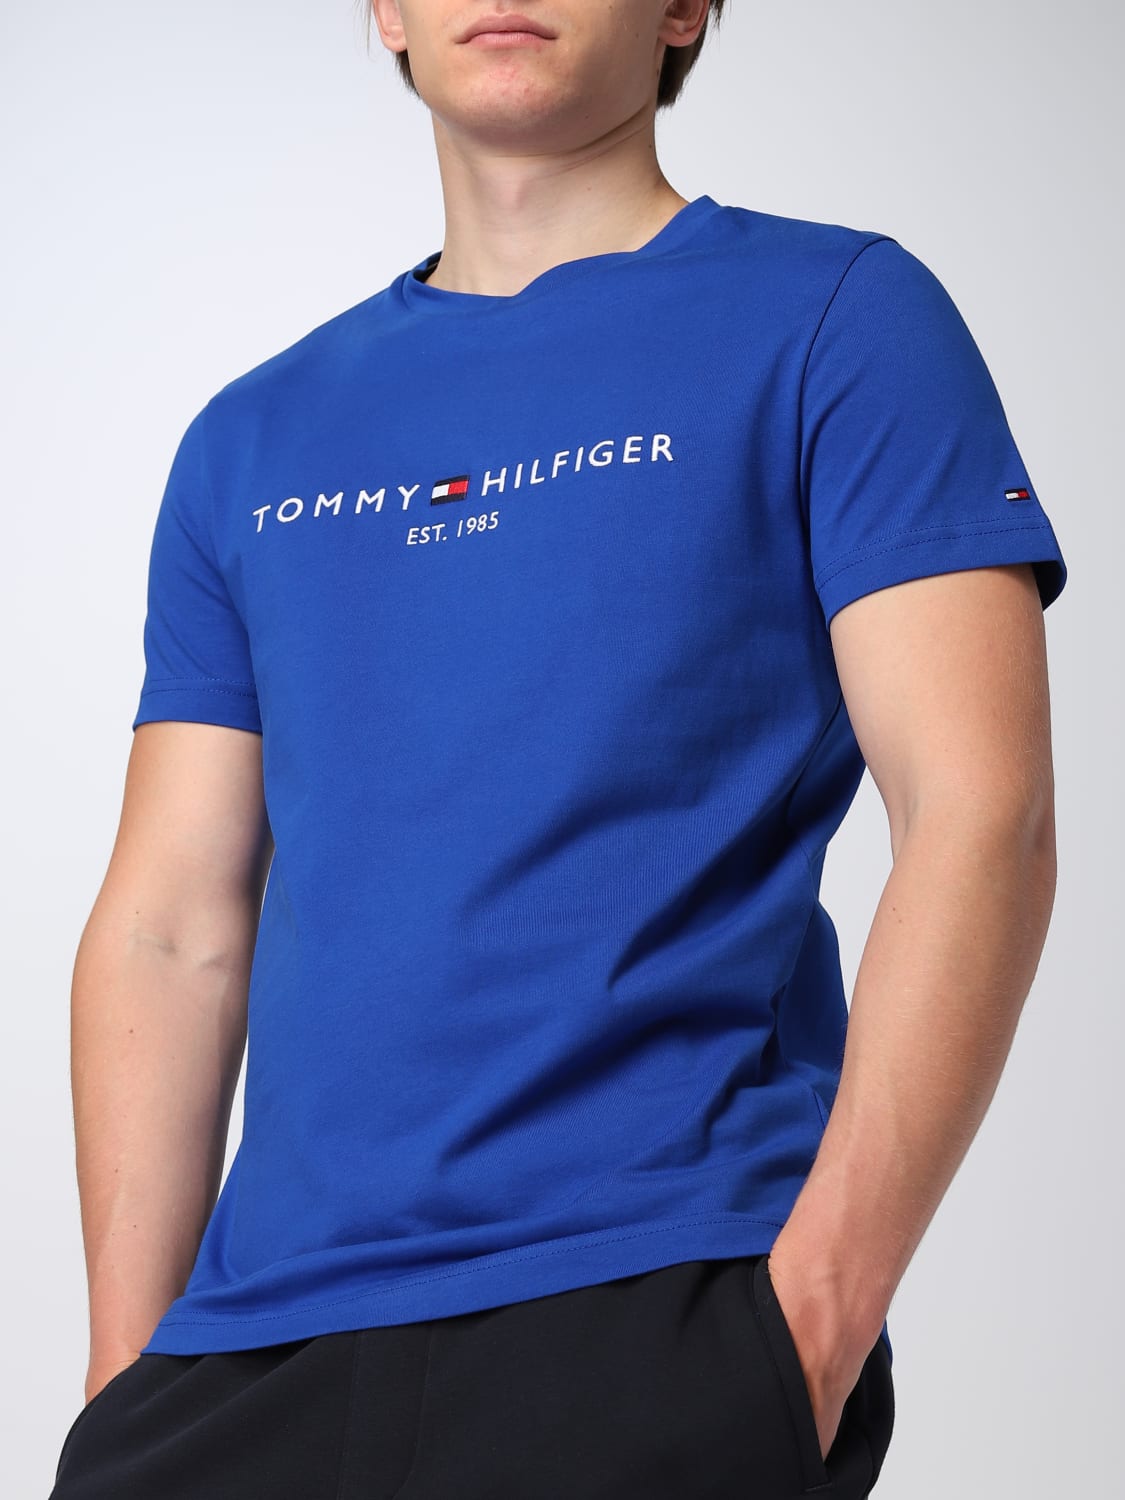 TOMMY HILFIGER: for man - Blue | Tommy Hilfiger t-shirt MW0MW11797 online on GIGLIO.COM